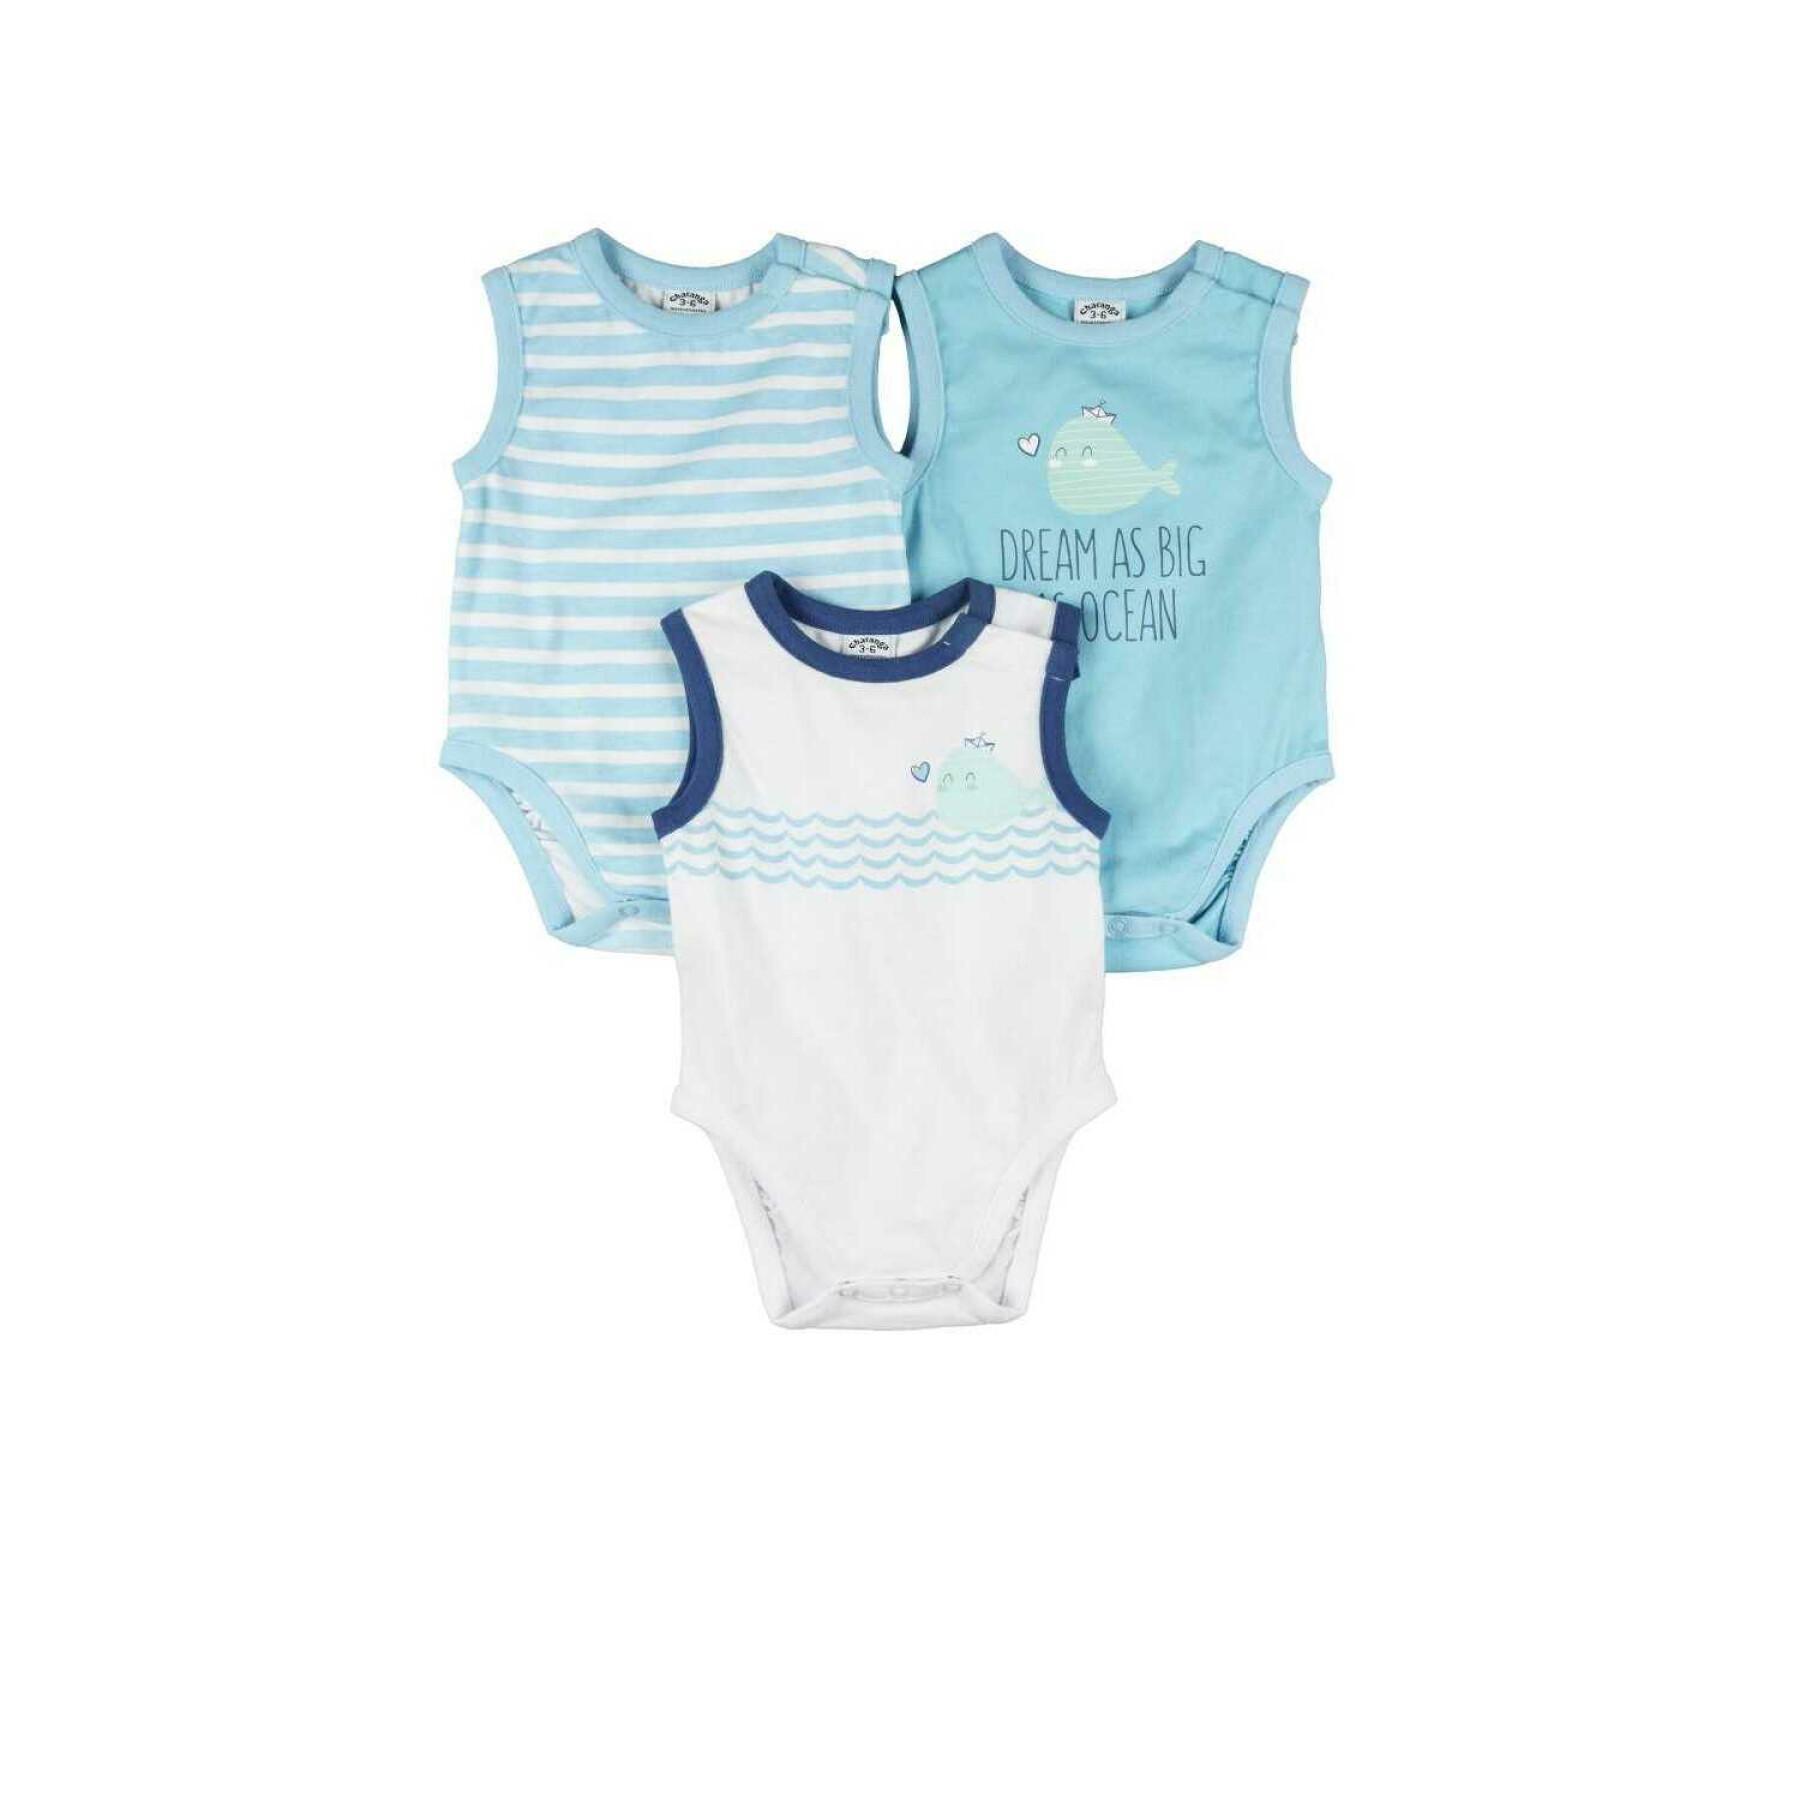 Set of 3 baby bodysuits Charanga Milds